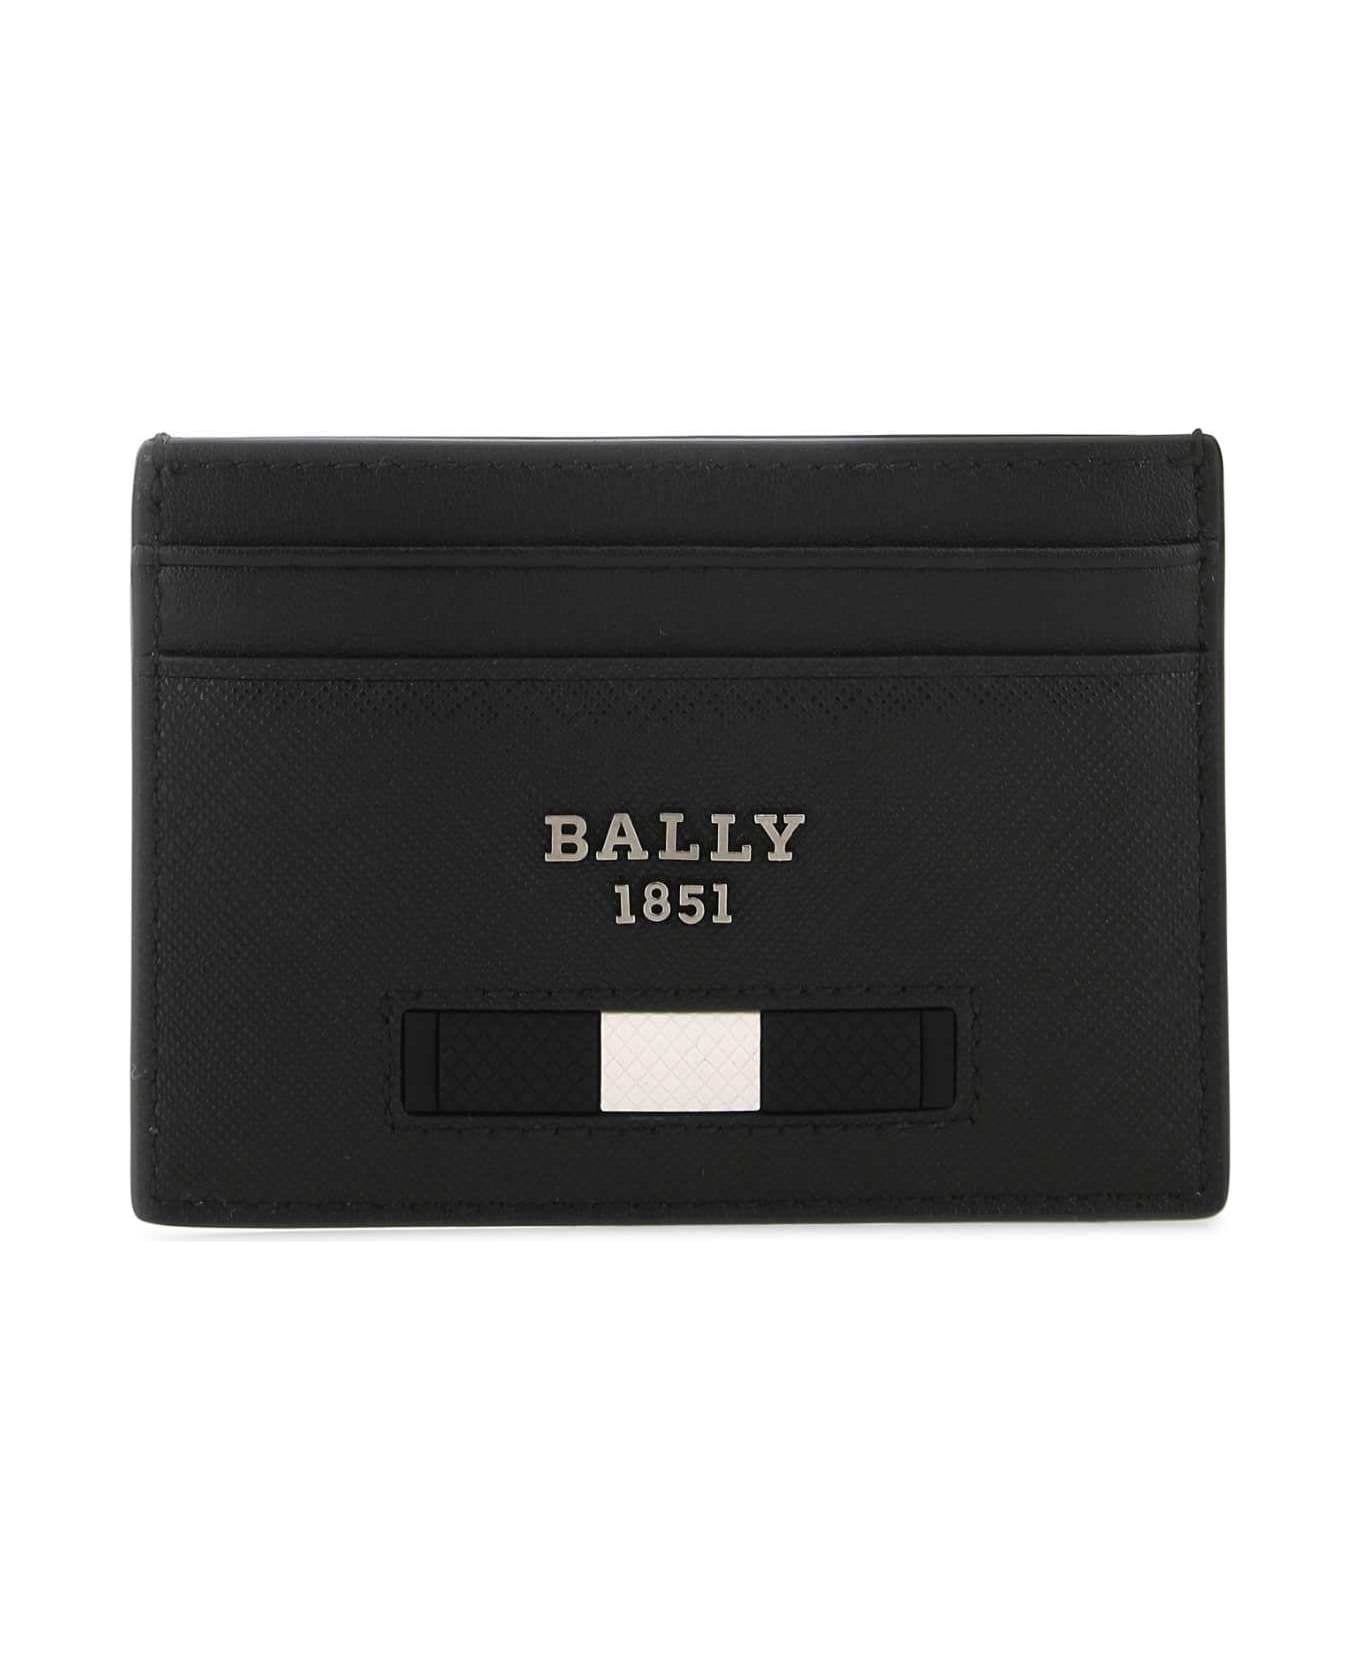 Bally Black Leather Card Holder - F100